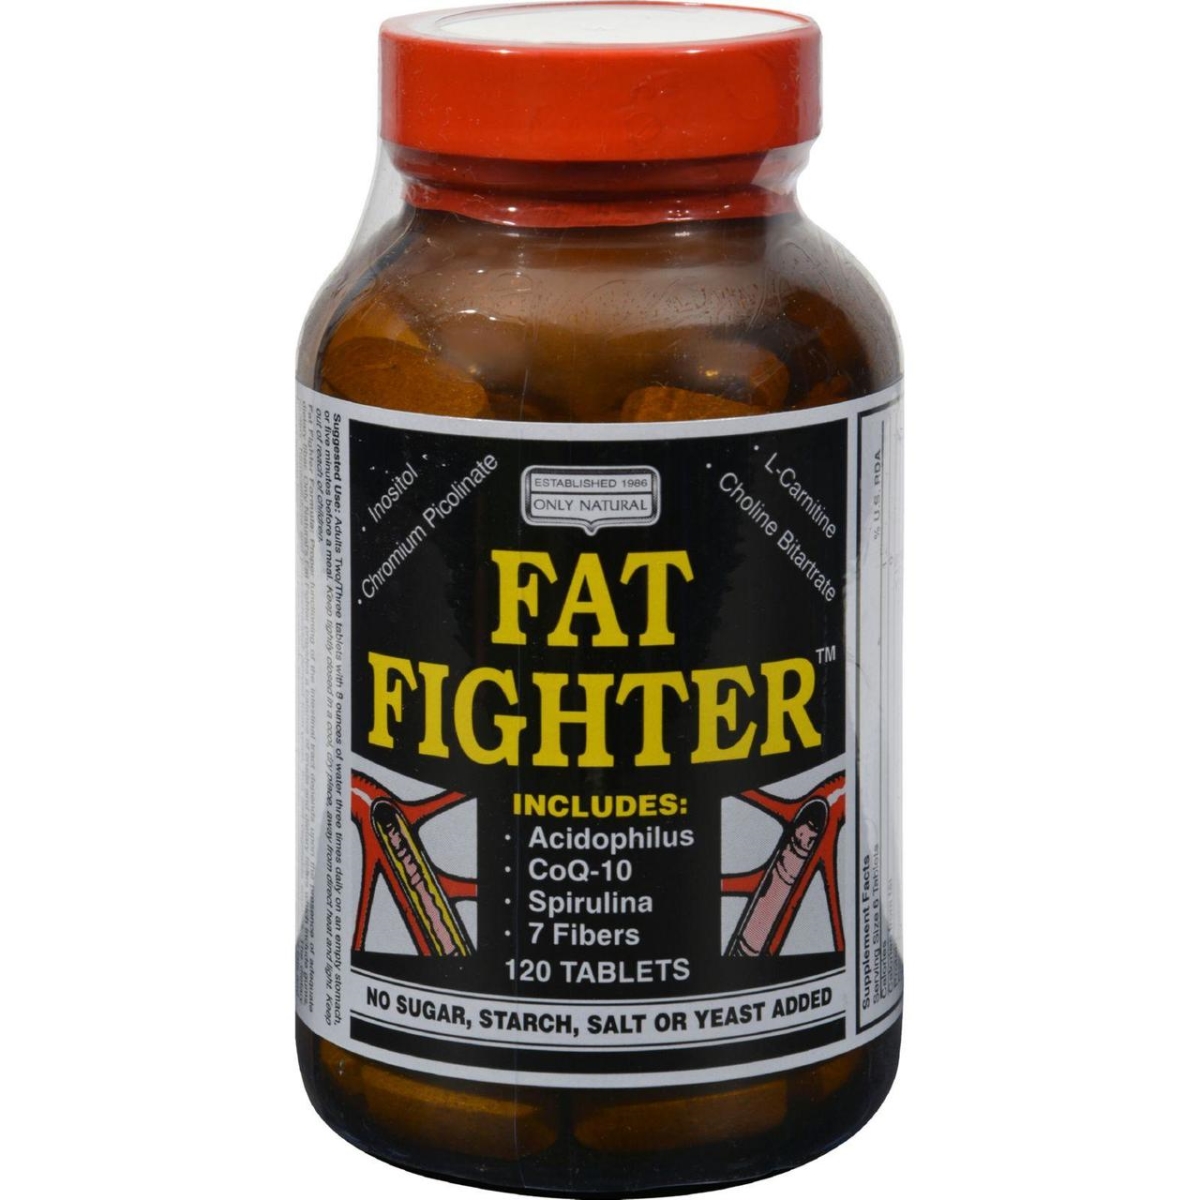 Hg0525675 Fat Fighter - 120 Tablets